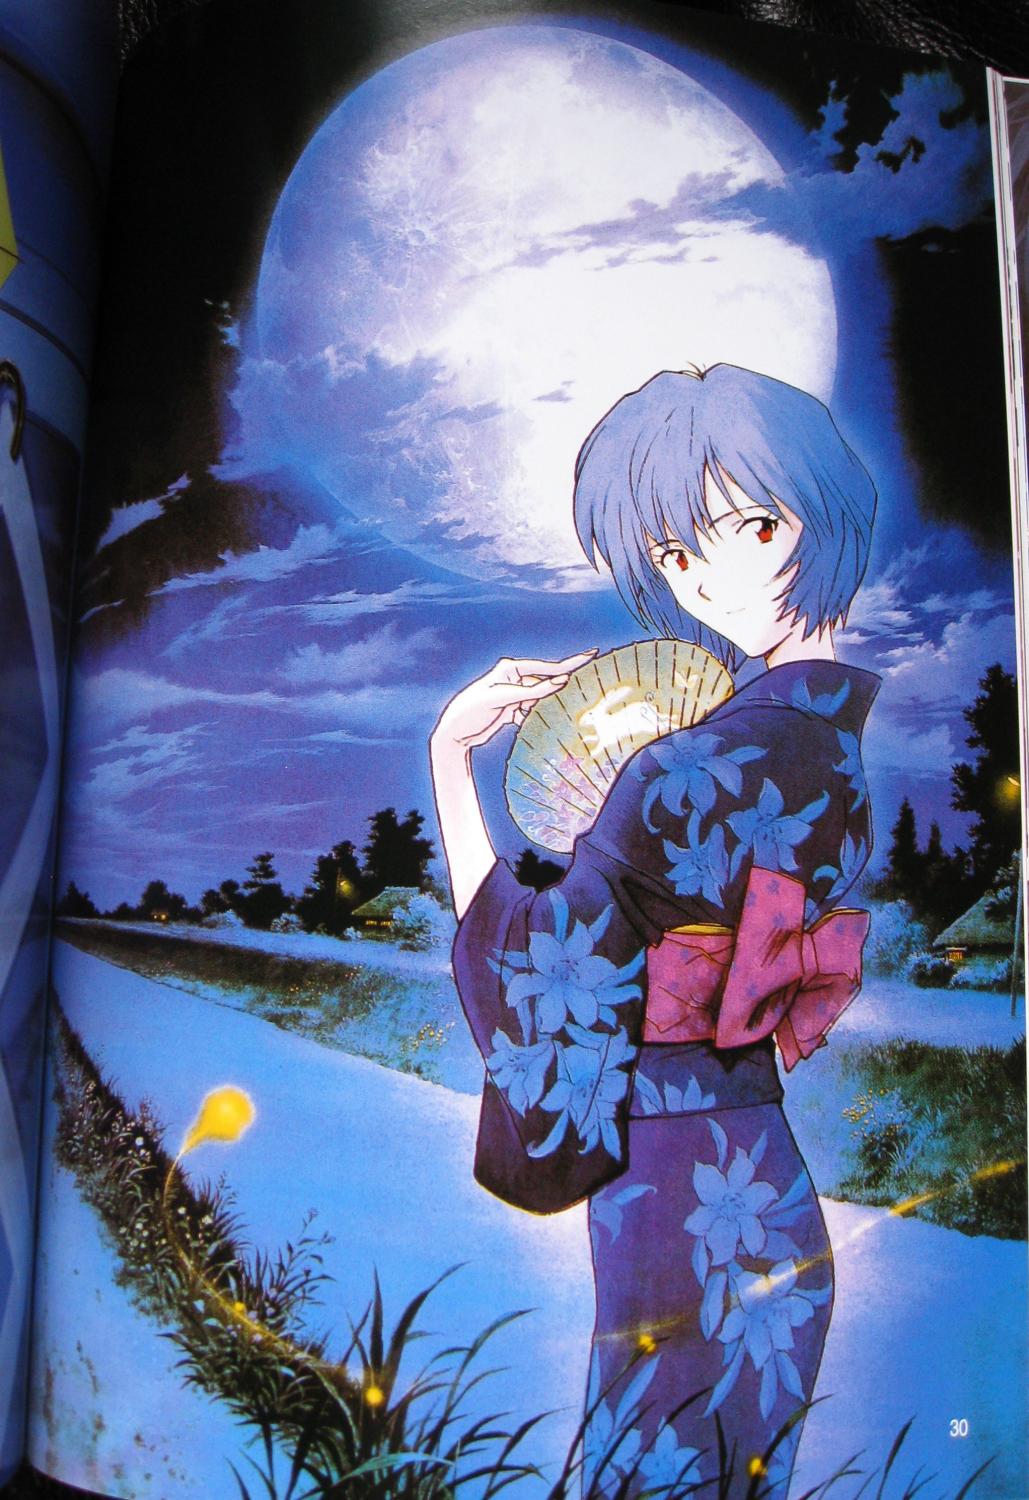 Neon Genesis Evangelion Illustration And Artwork Collection Japanese Language Edition Isbn 